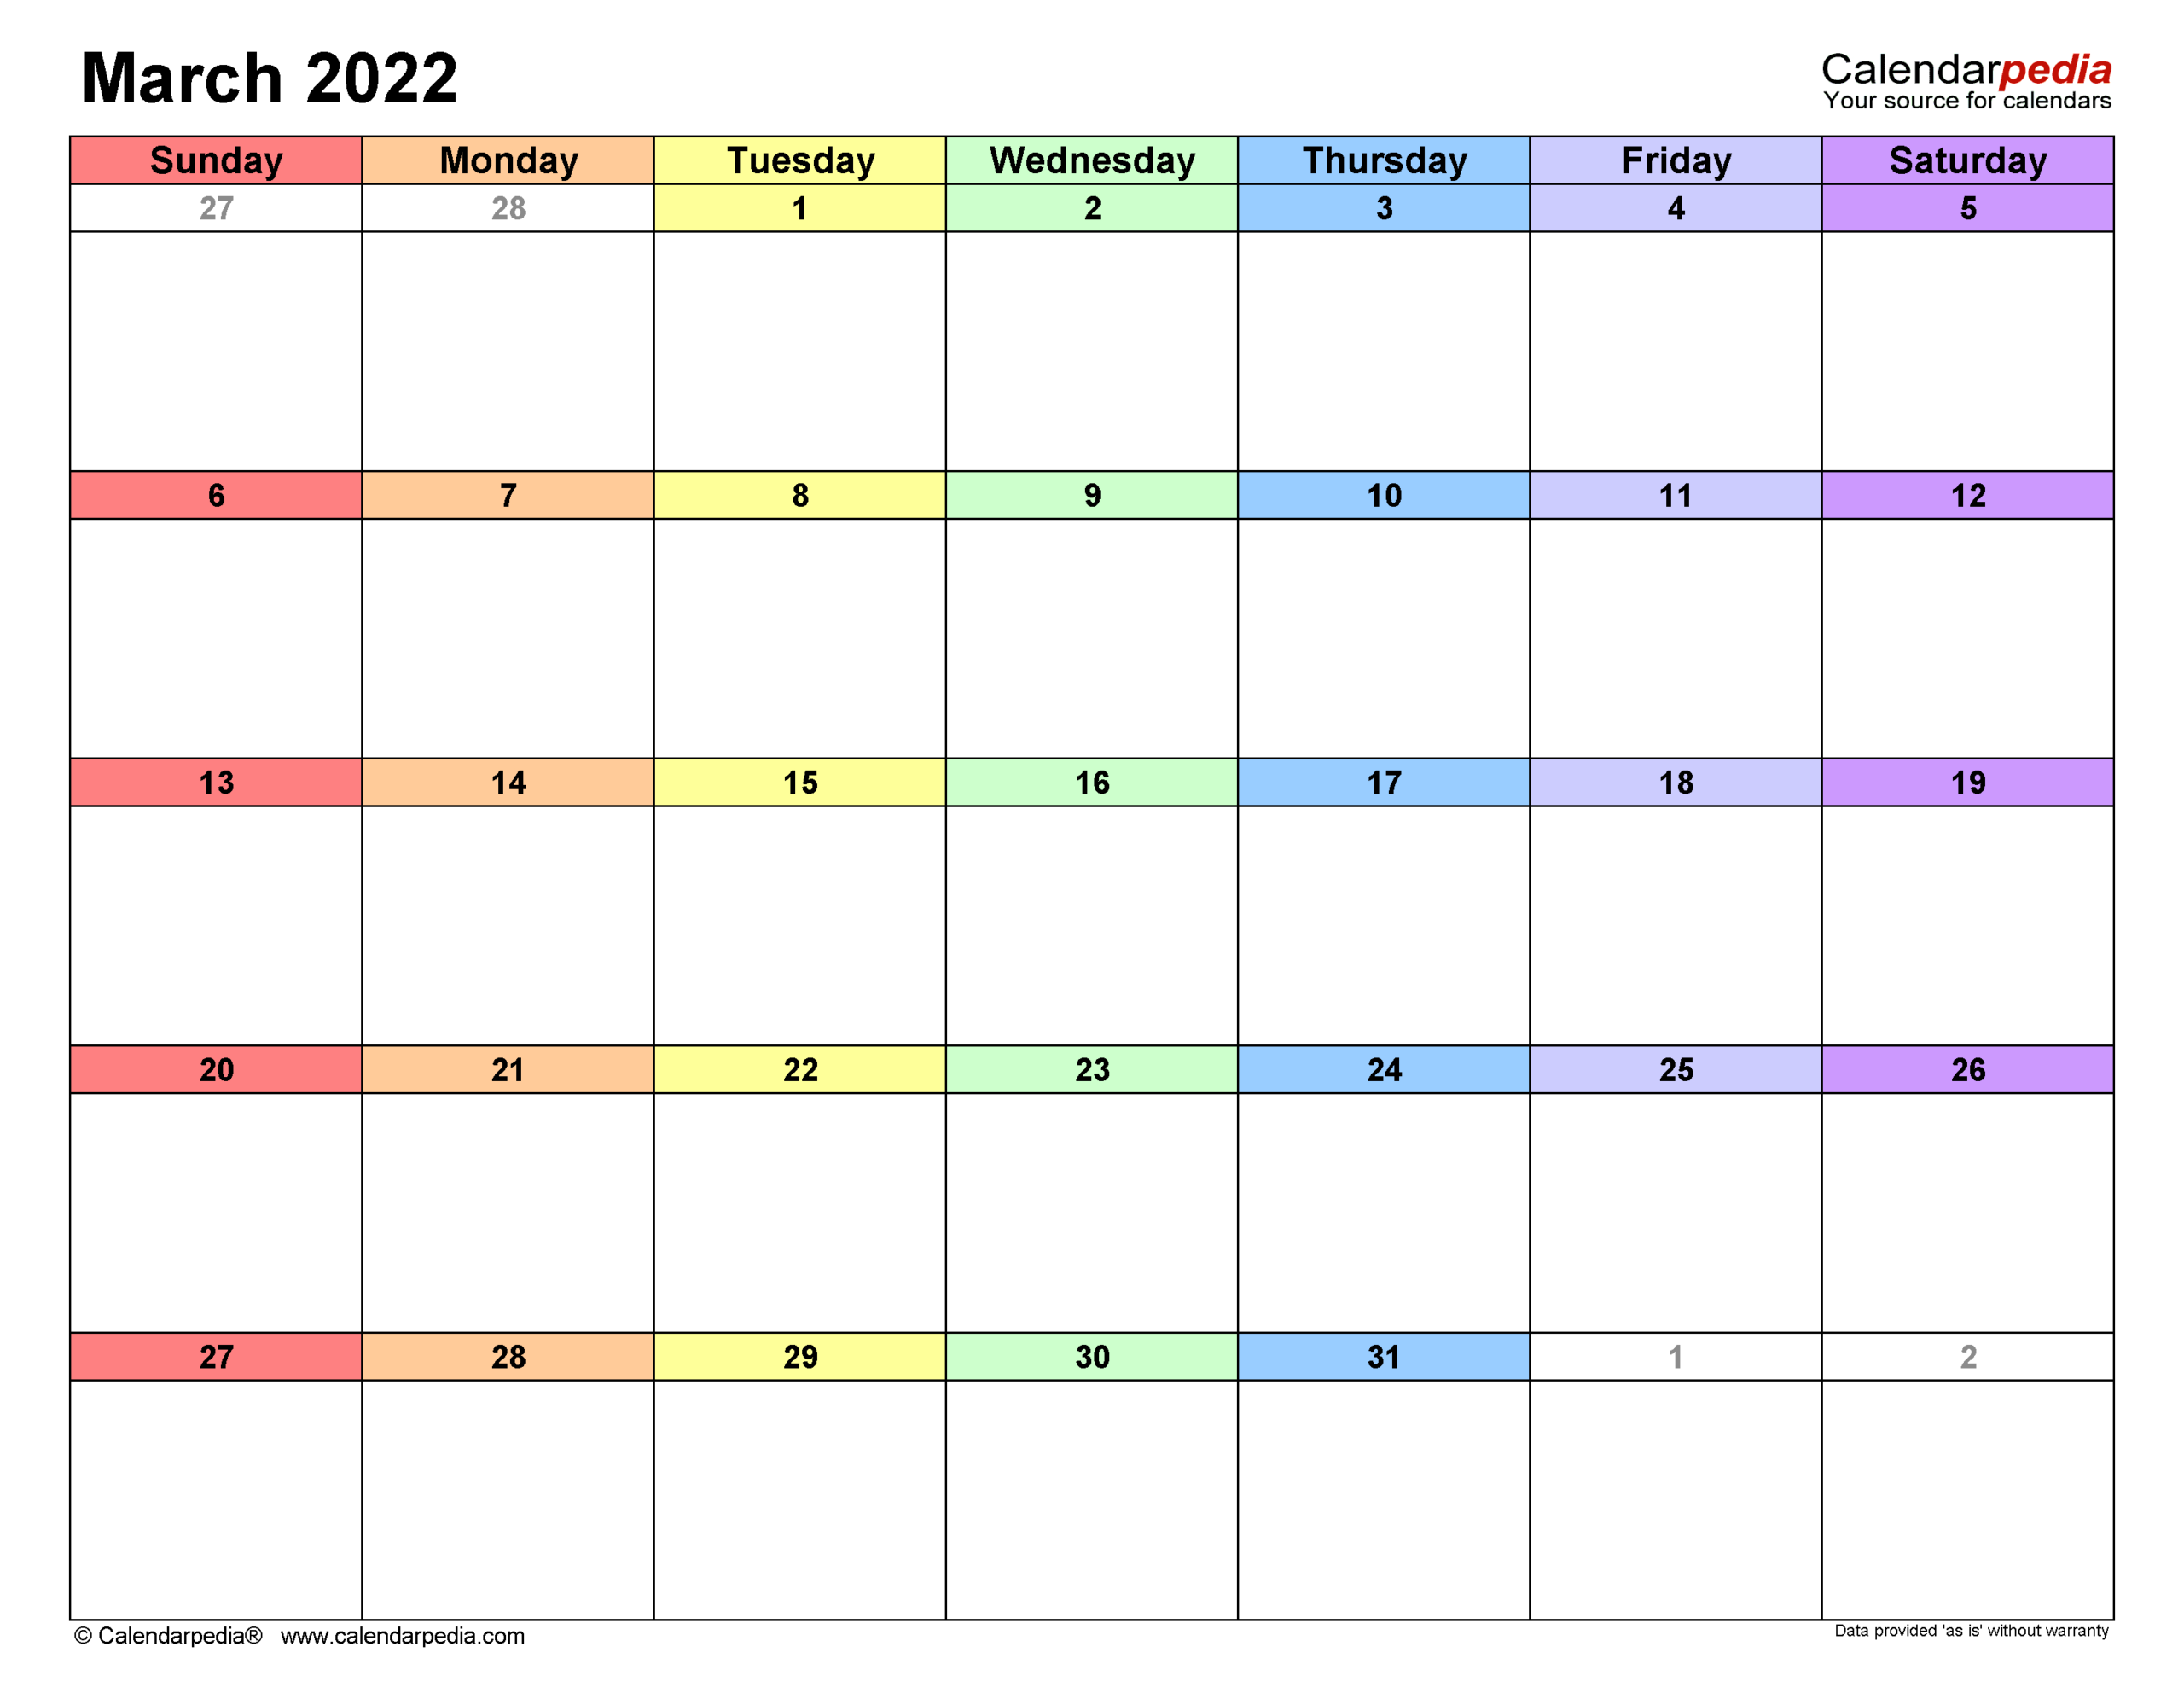 Catch Calendar On March 2022